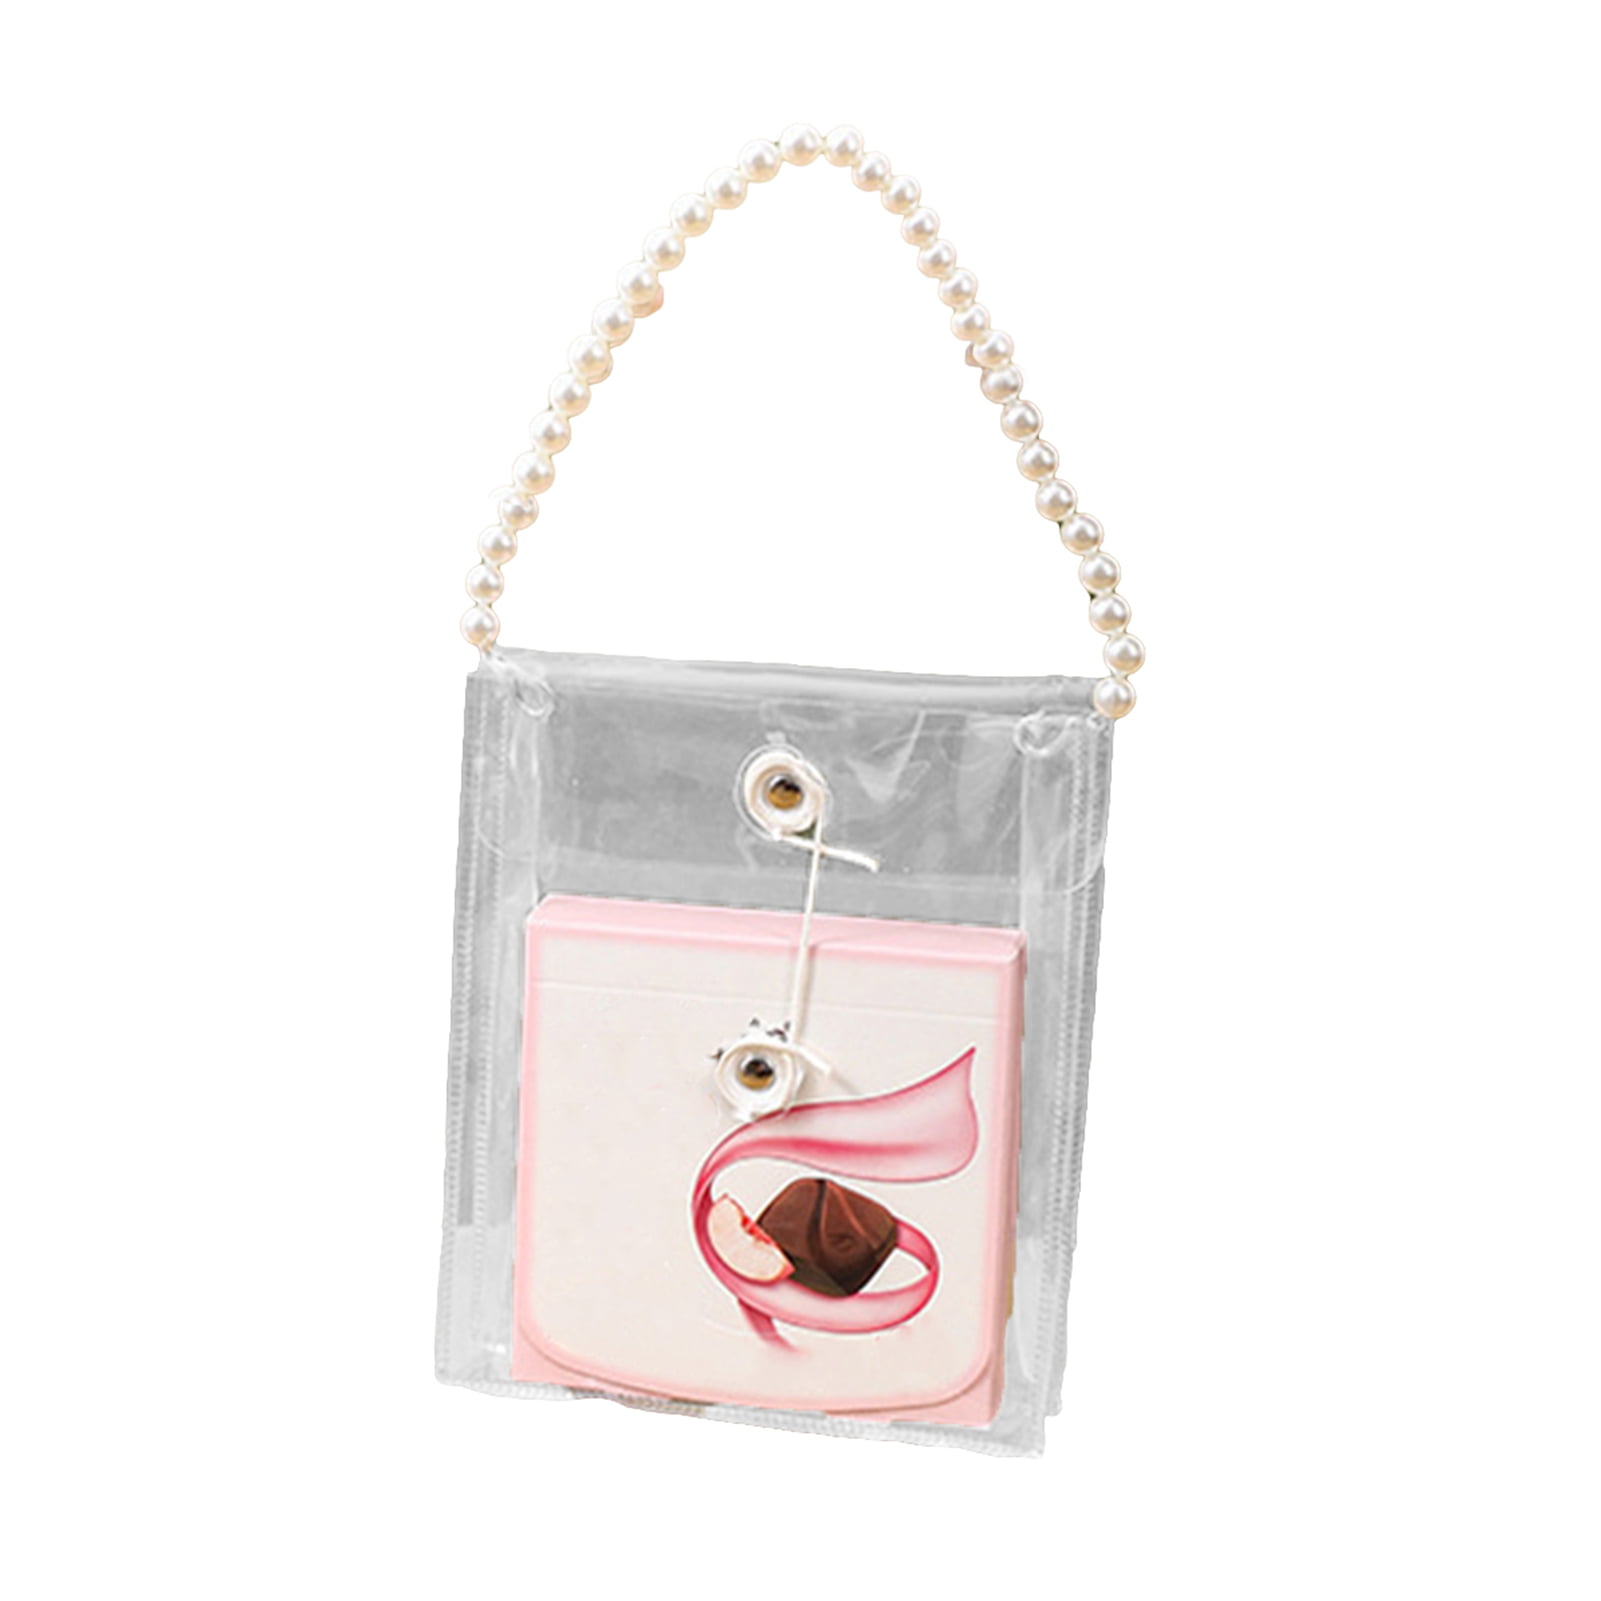 10pcs/set Pearl Luster Bone Bags, New Mark Packaging Bags, Plastic  Self-adhesive Bags For Jewelry Packaging, Made Of Pp5 Material